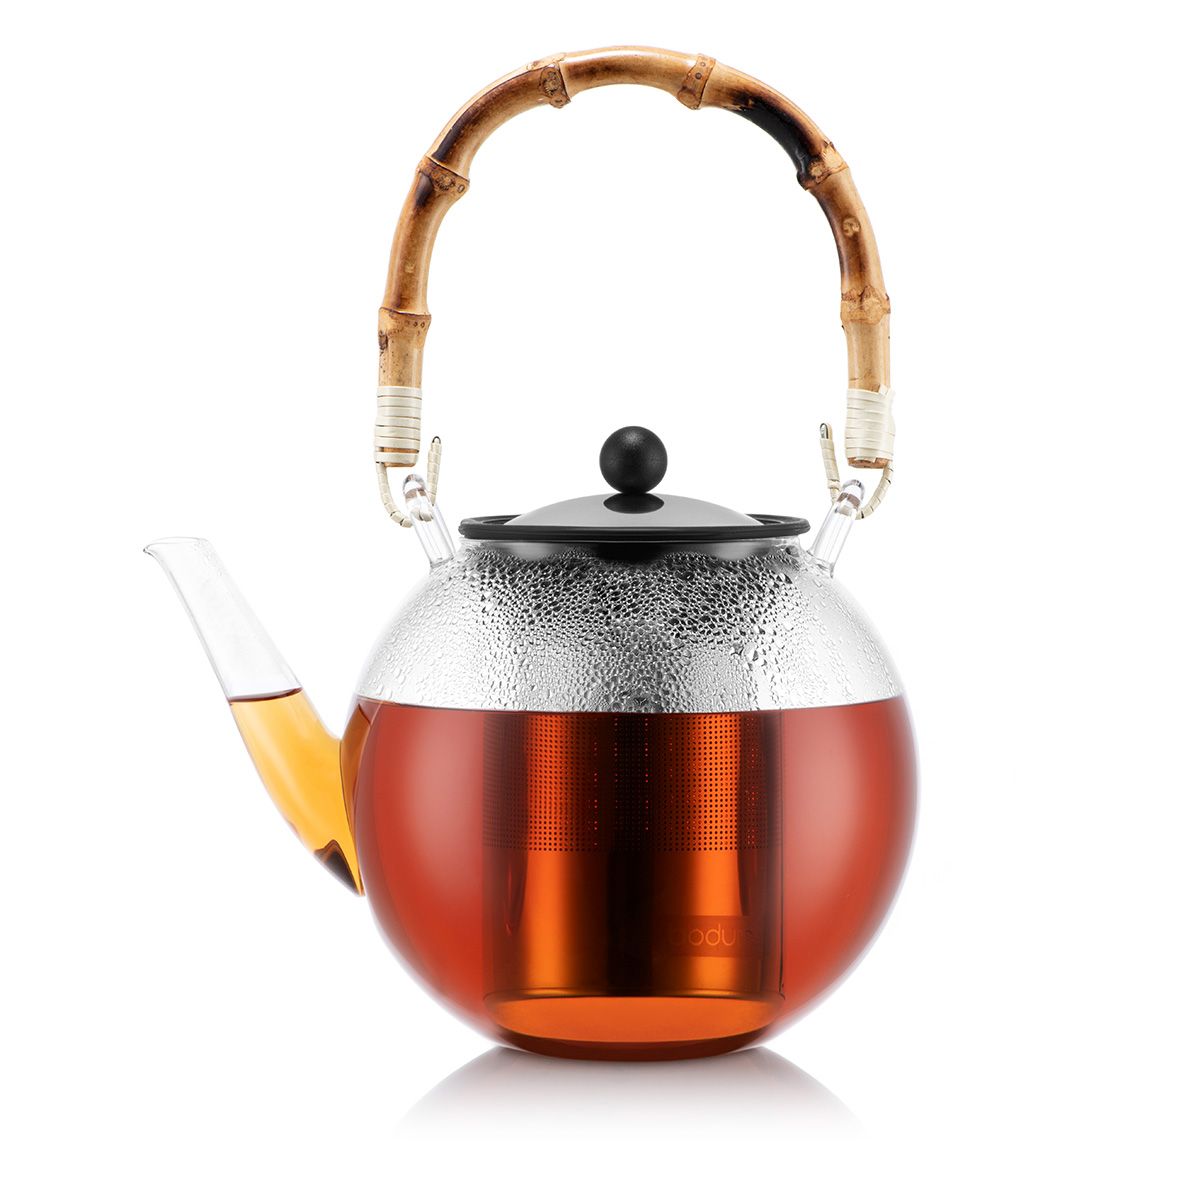 Bodum Assam Glass Tea Press with Stainless Steel Filter,  17-Ounce: Tea Services: Teapots